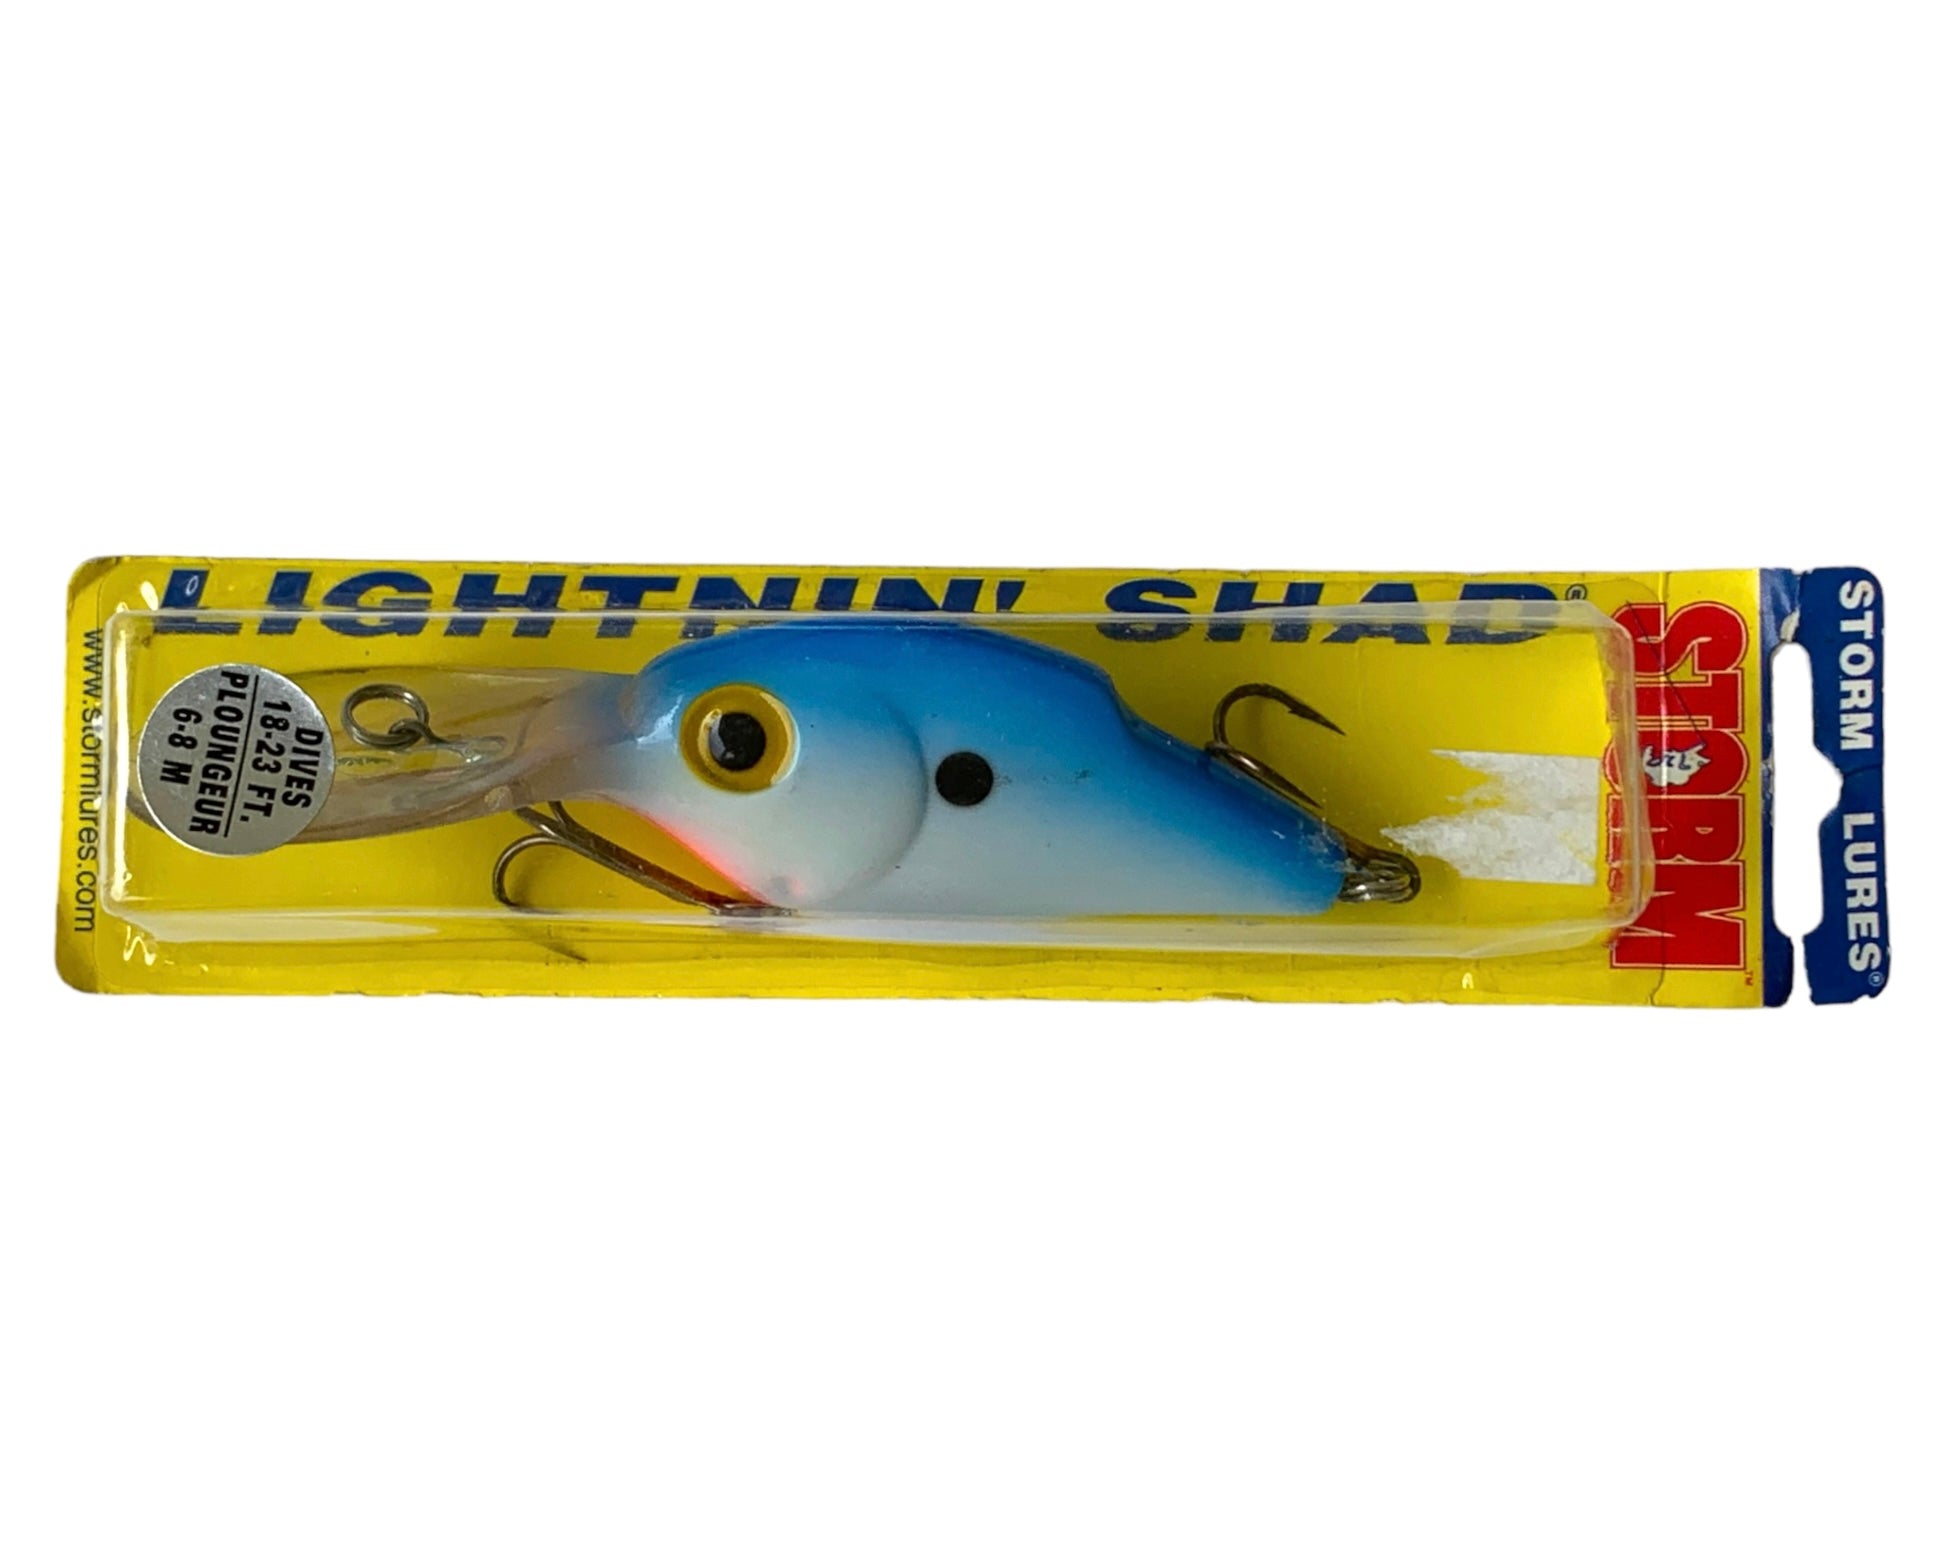 STORM LURES LIGHTNIN SHAD Fishing Lure • AL222 FIRESTORM BLUE BACK – Toad  Tackle